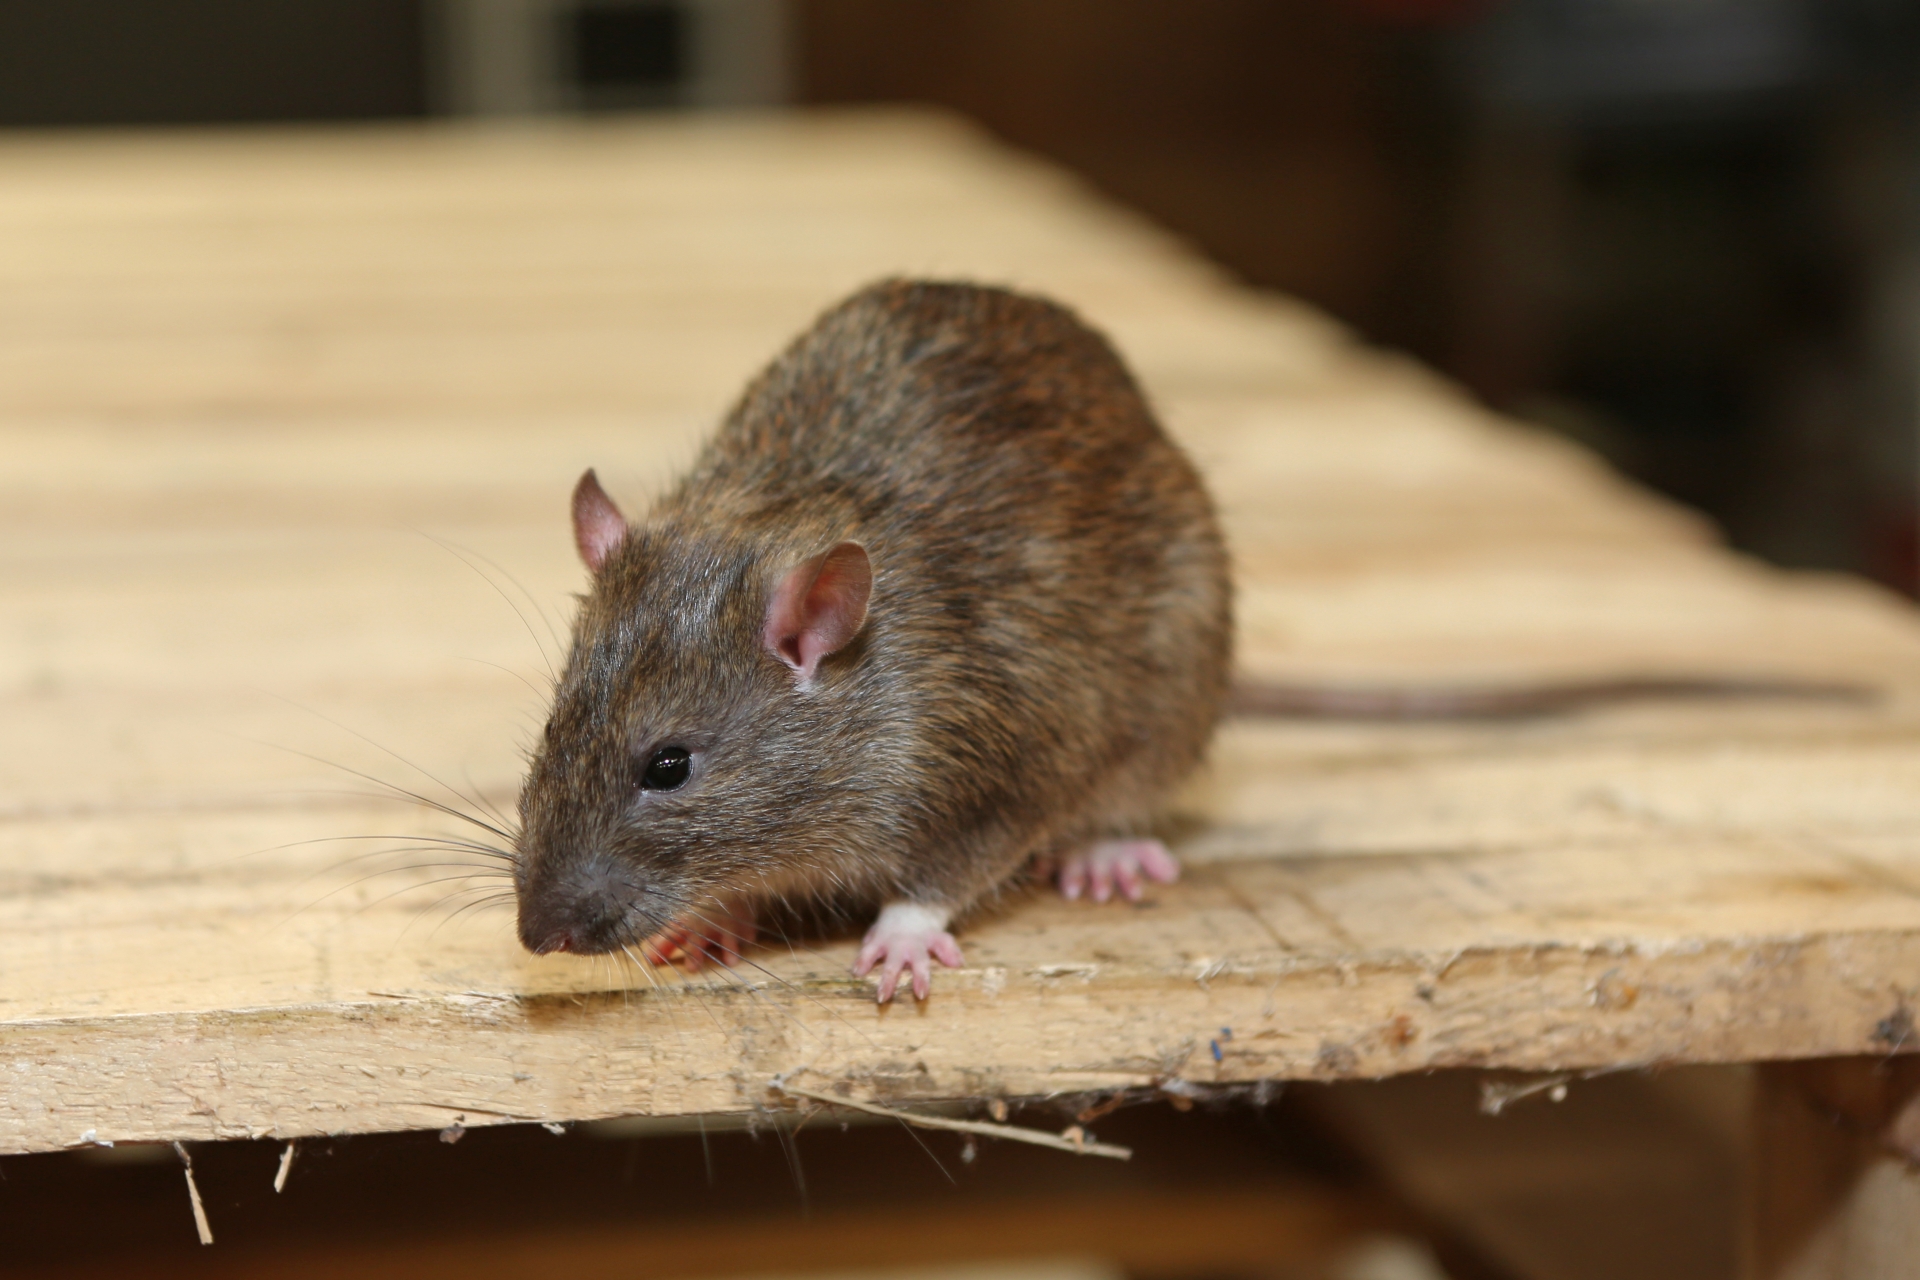 Rat Infestation, Pest Control in Islington, Barnsbury, Canonbury, N1. Call Now 020 8166 9746